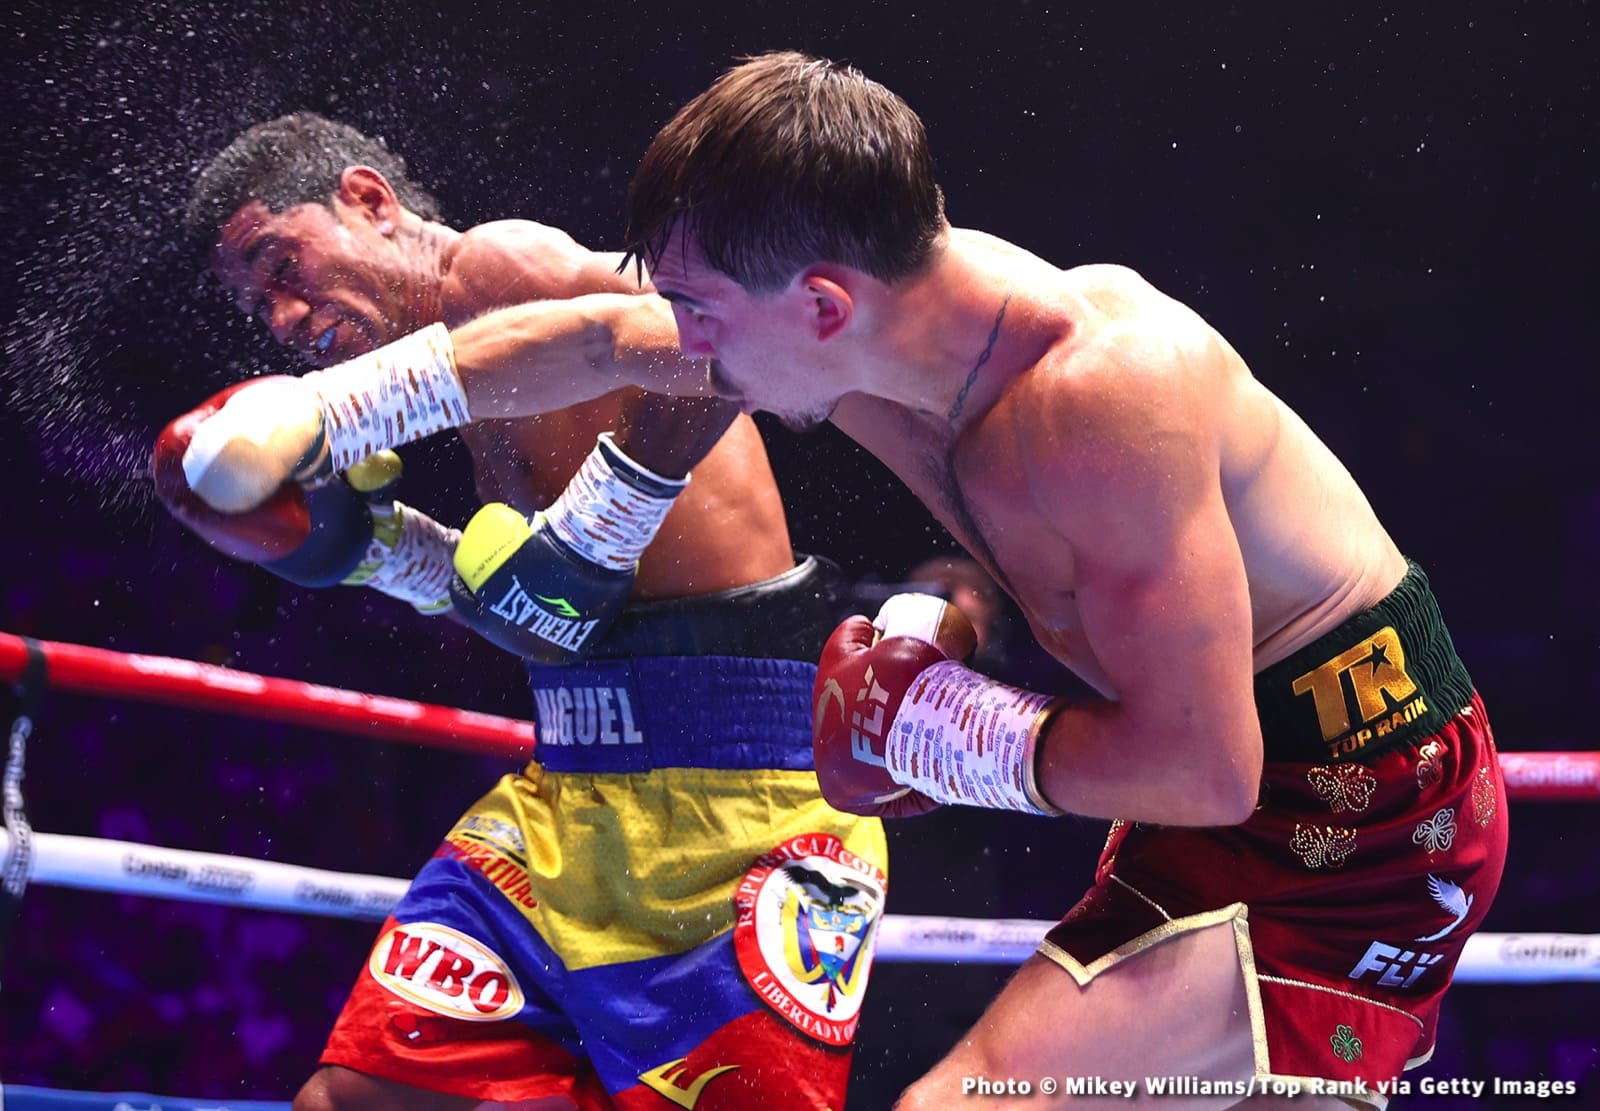 Miguel Marriaga boxing image / photo